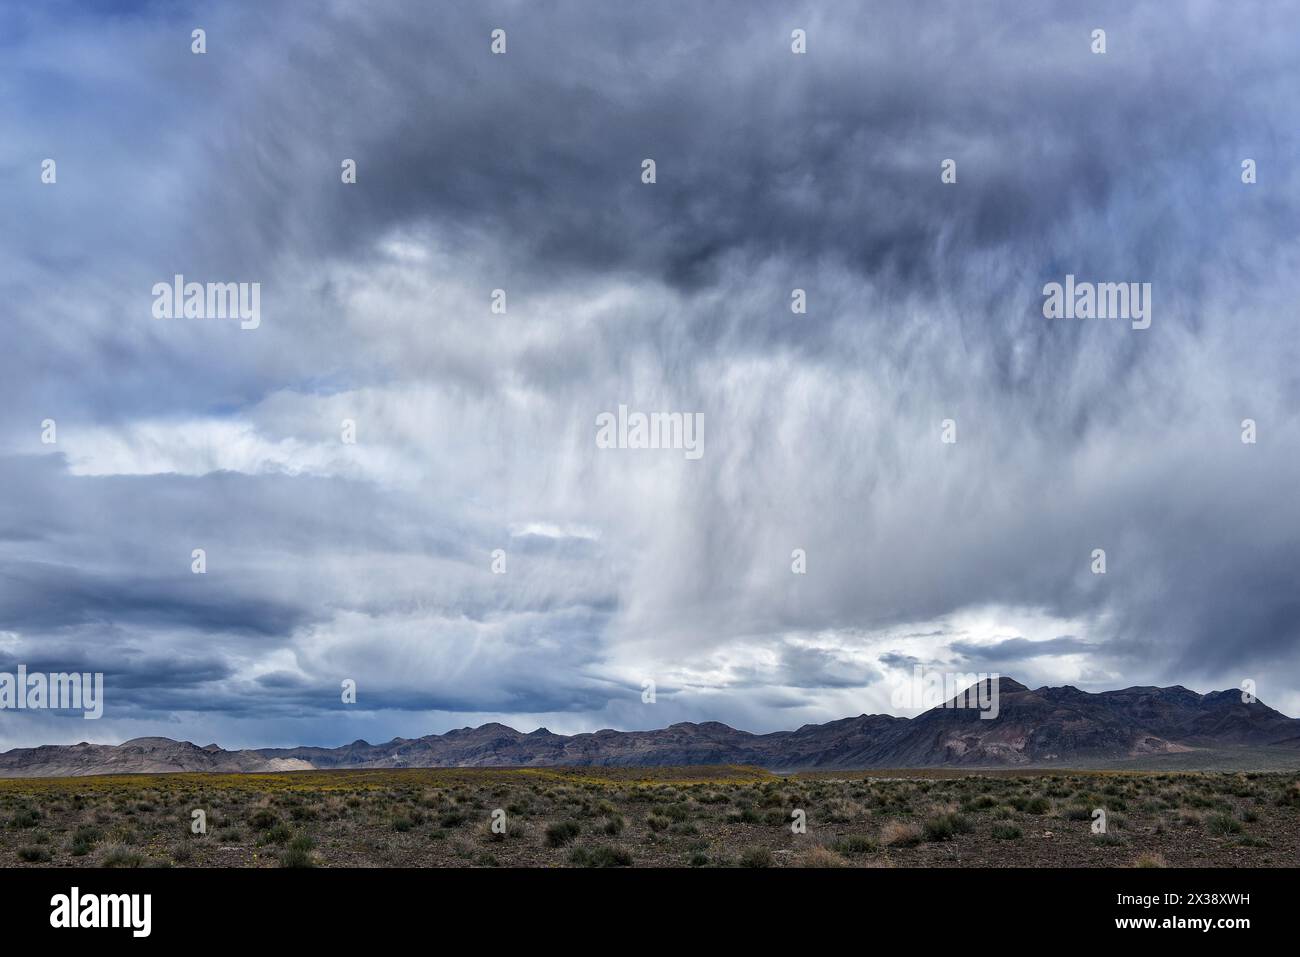 Storm Clouds Over Ash Meadows National Wildlife Refuge, situato nella valle di Amargosa nel Nevada sudoccidentale, a est del Death Valley National Park. Foto Stock